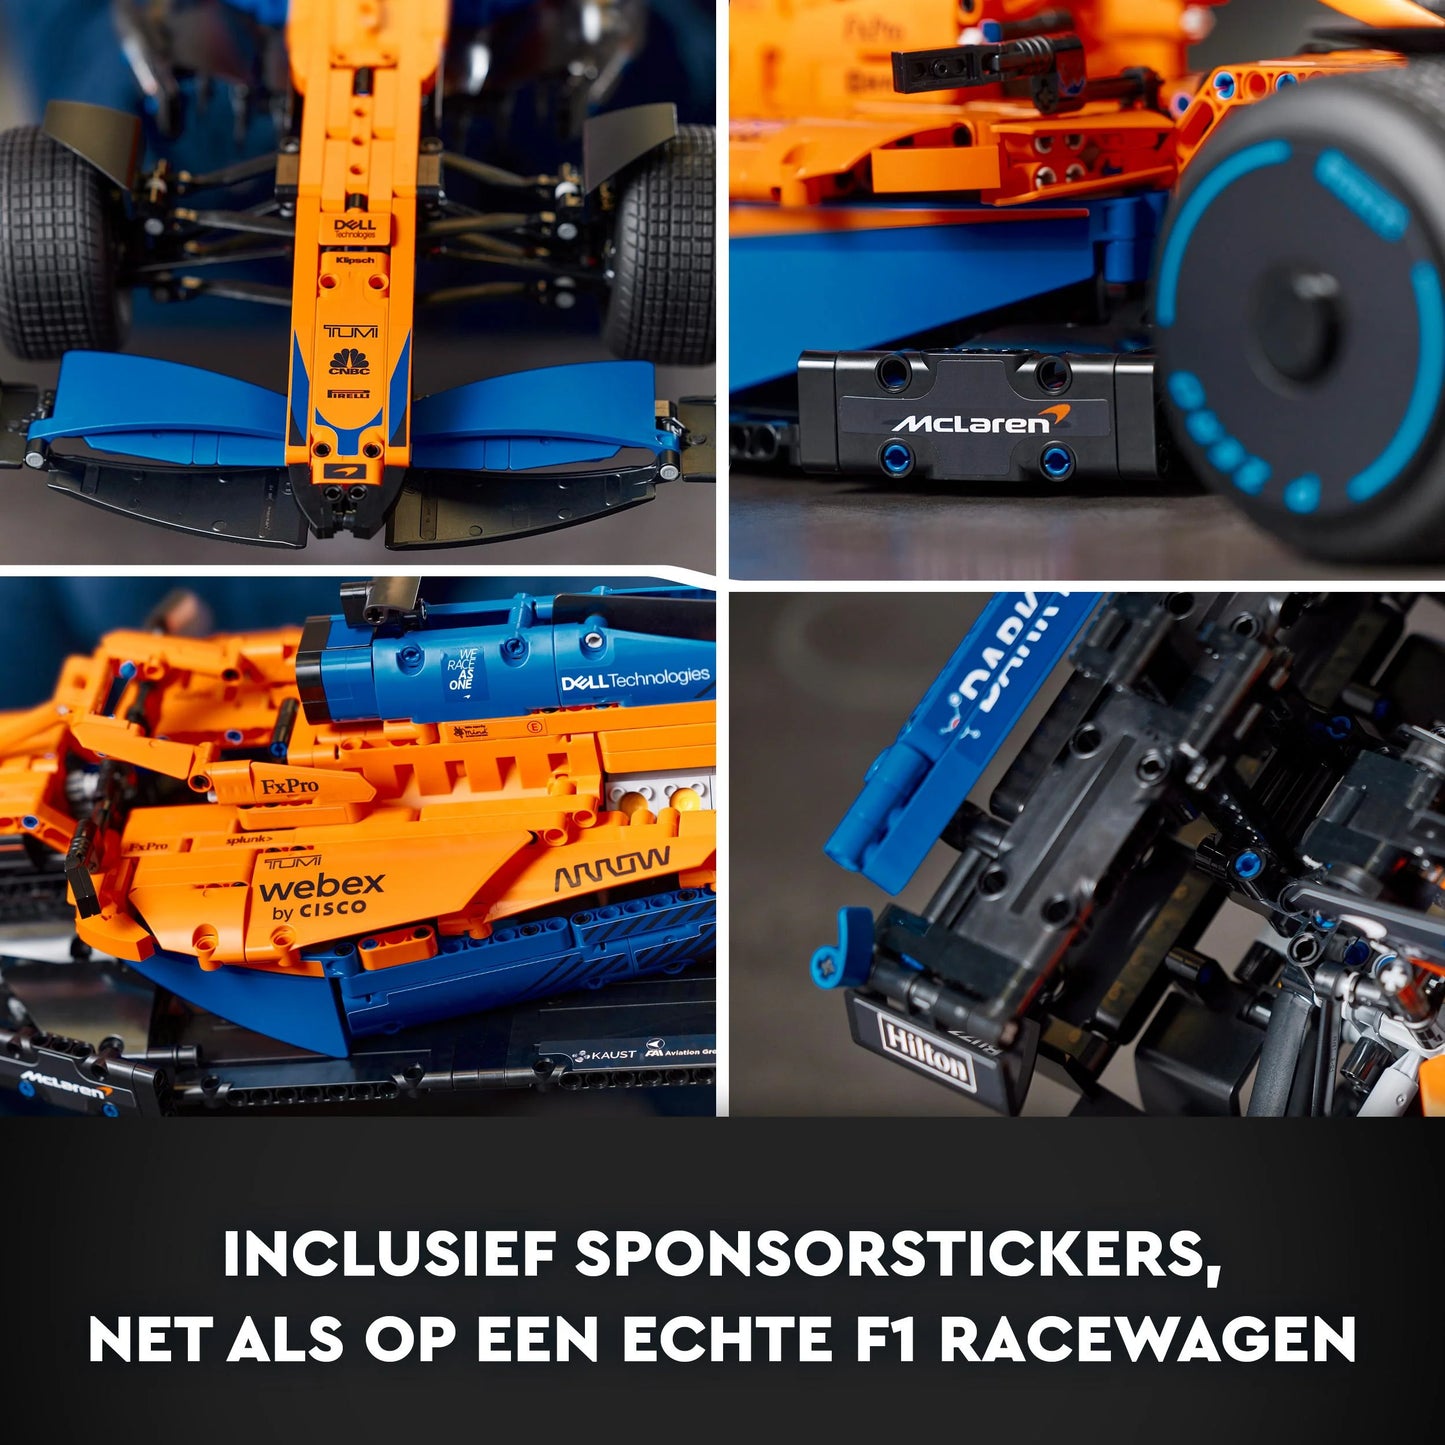 McLaren Formula 1 Racing Car - LEGO Technic